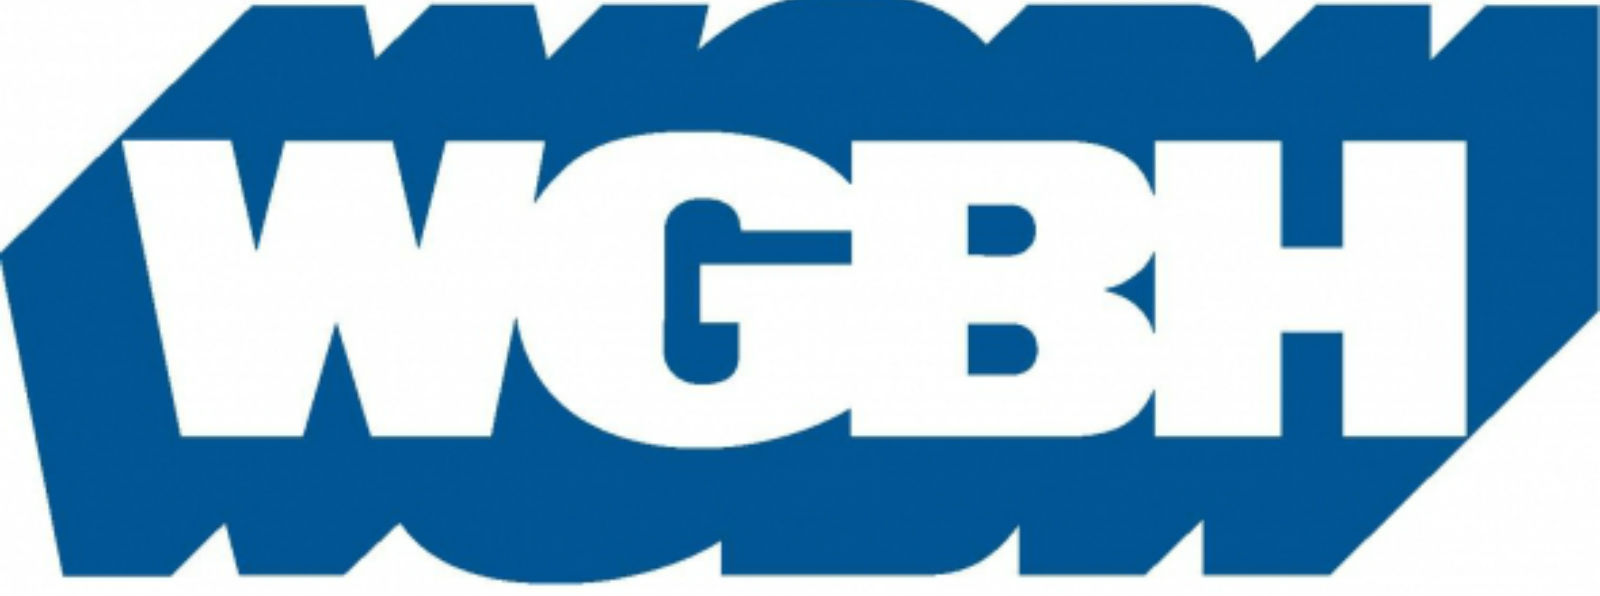 WGBH-Logo-EPS-590x332.jpg